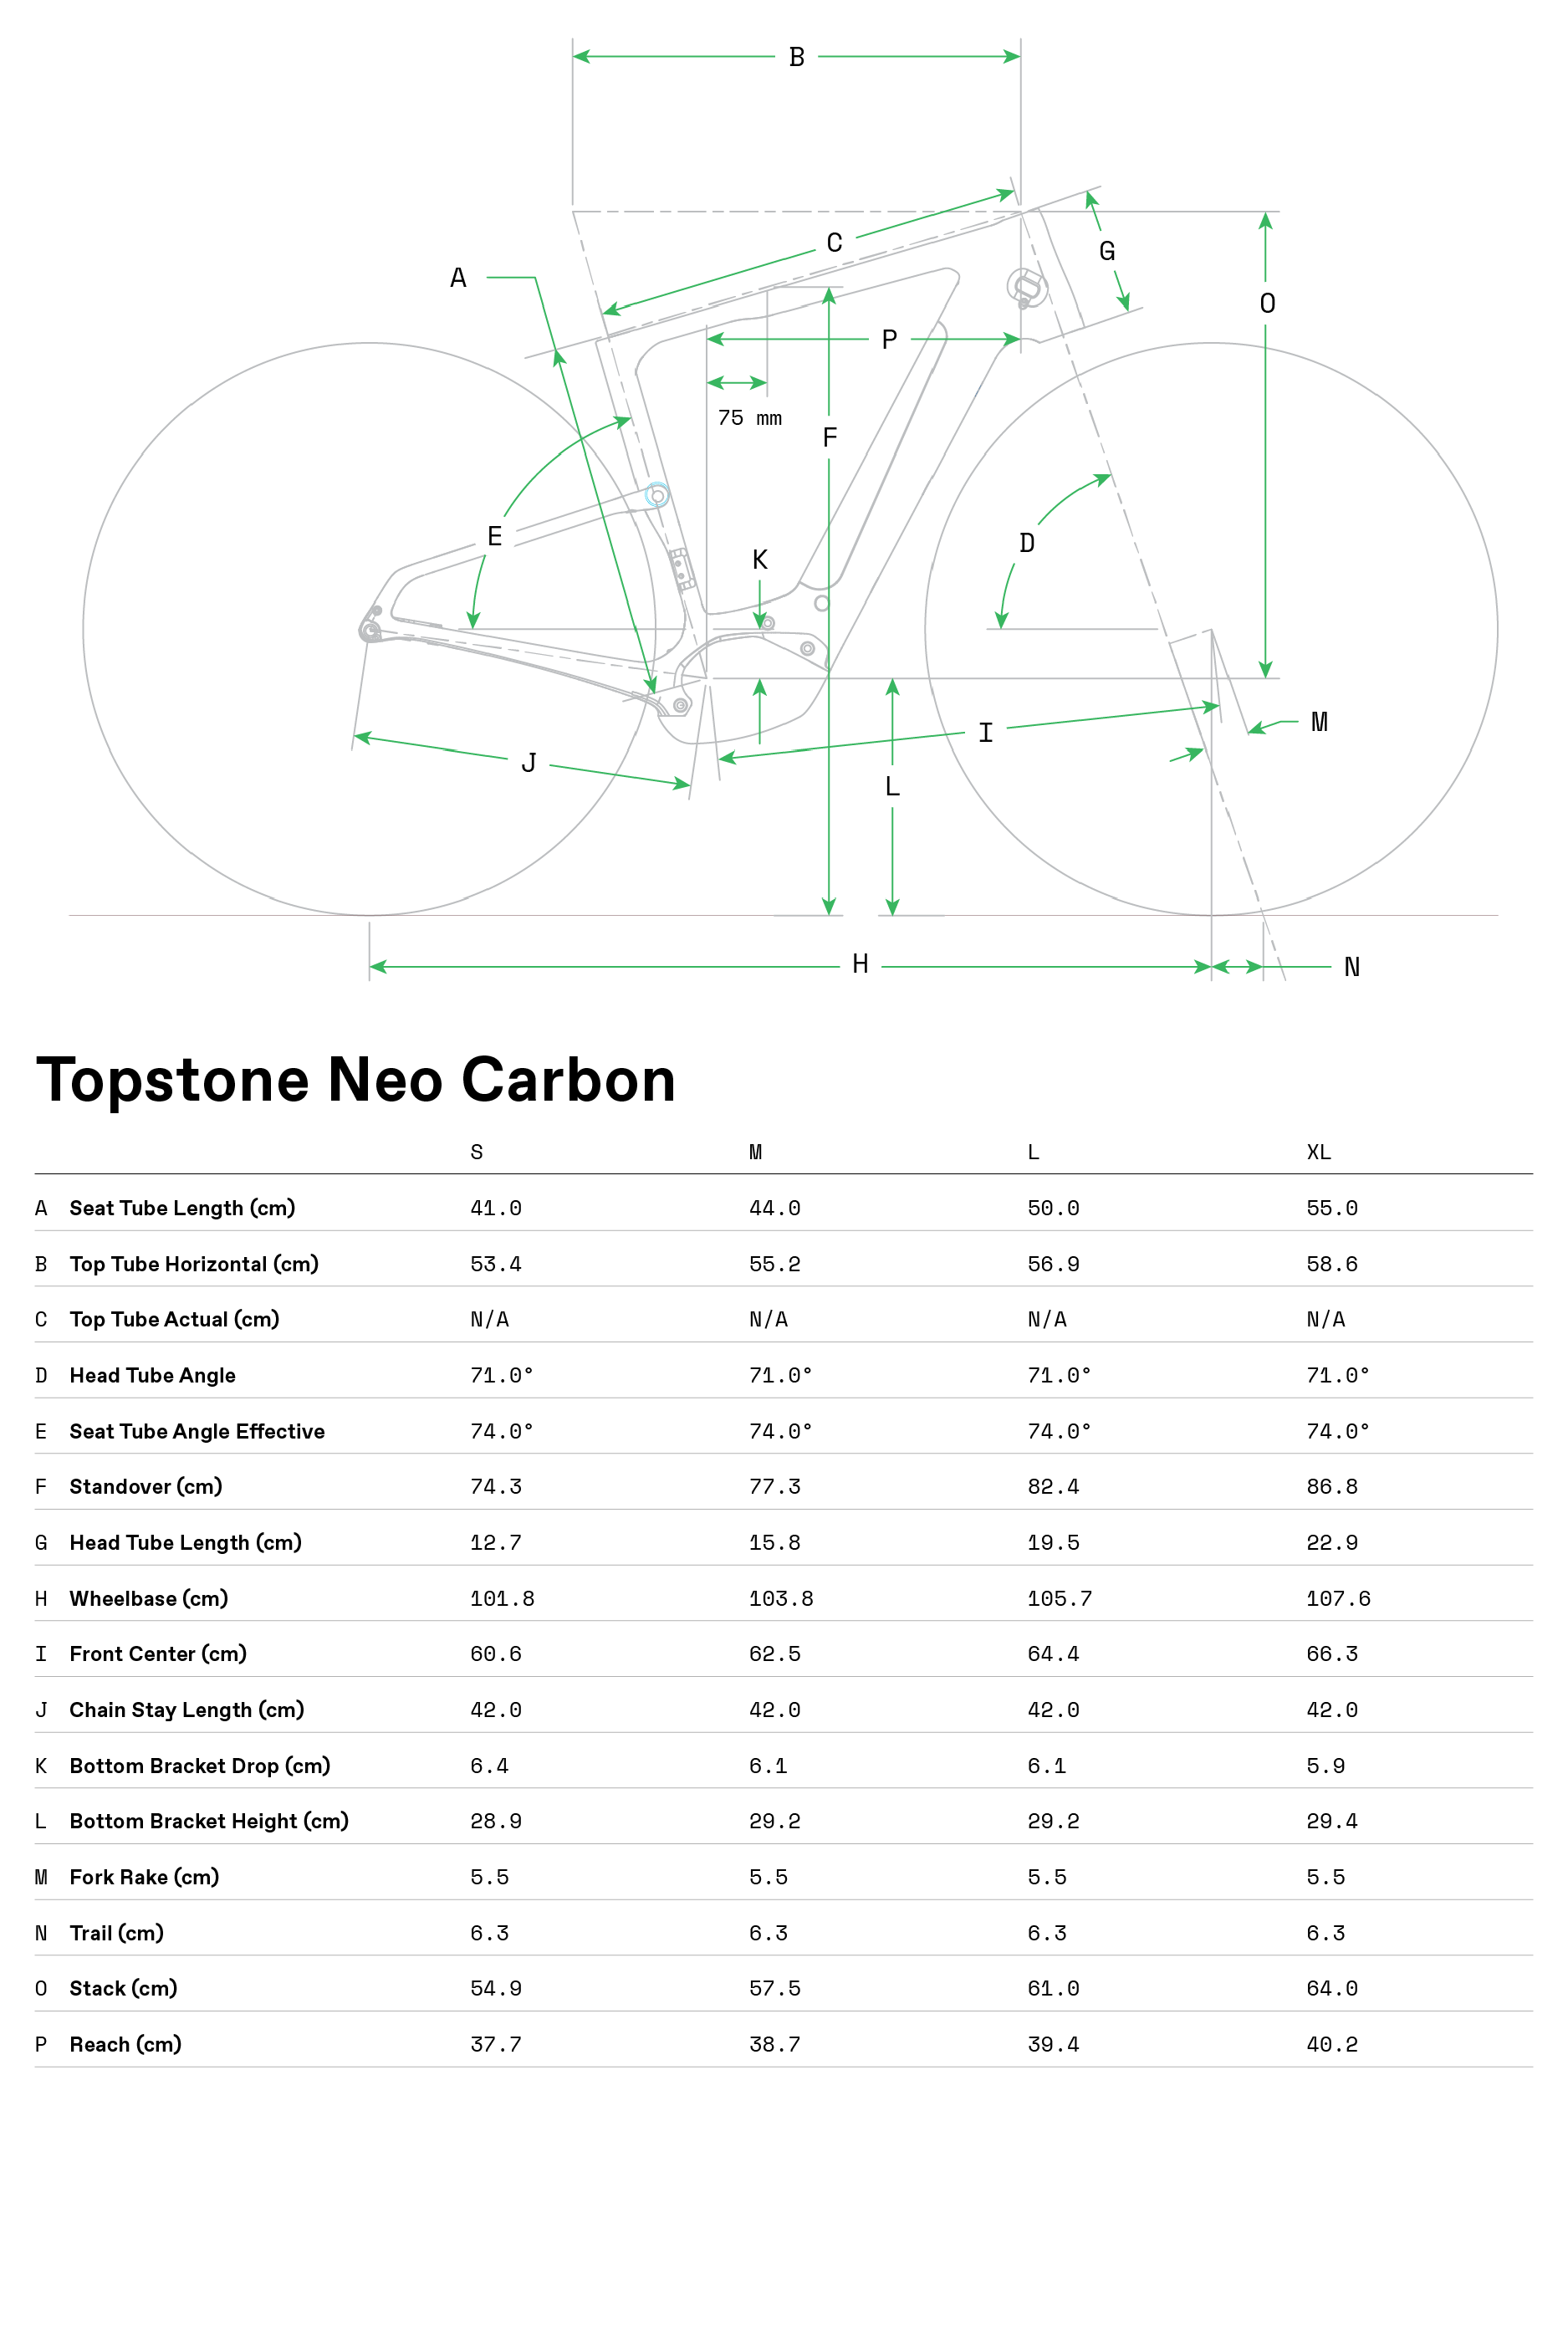 topstone neo carbon geo table